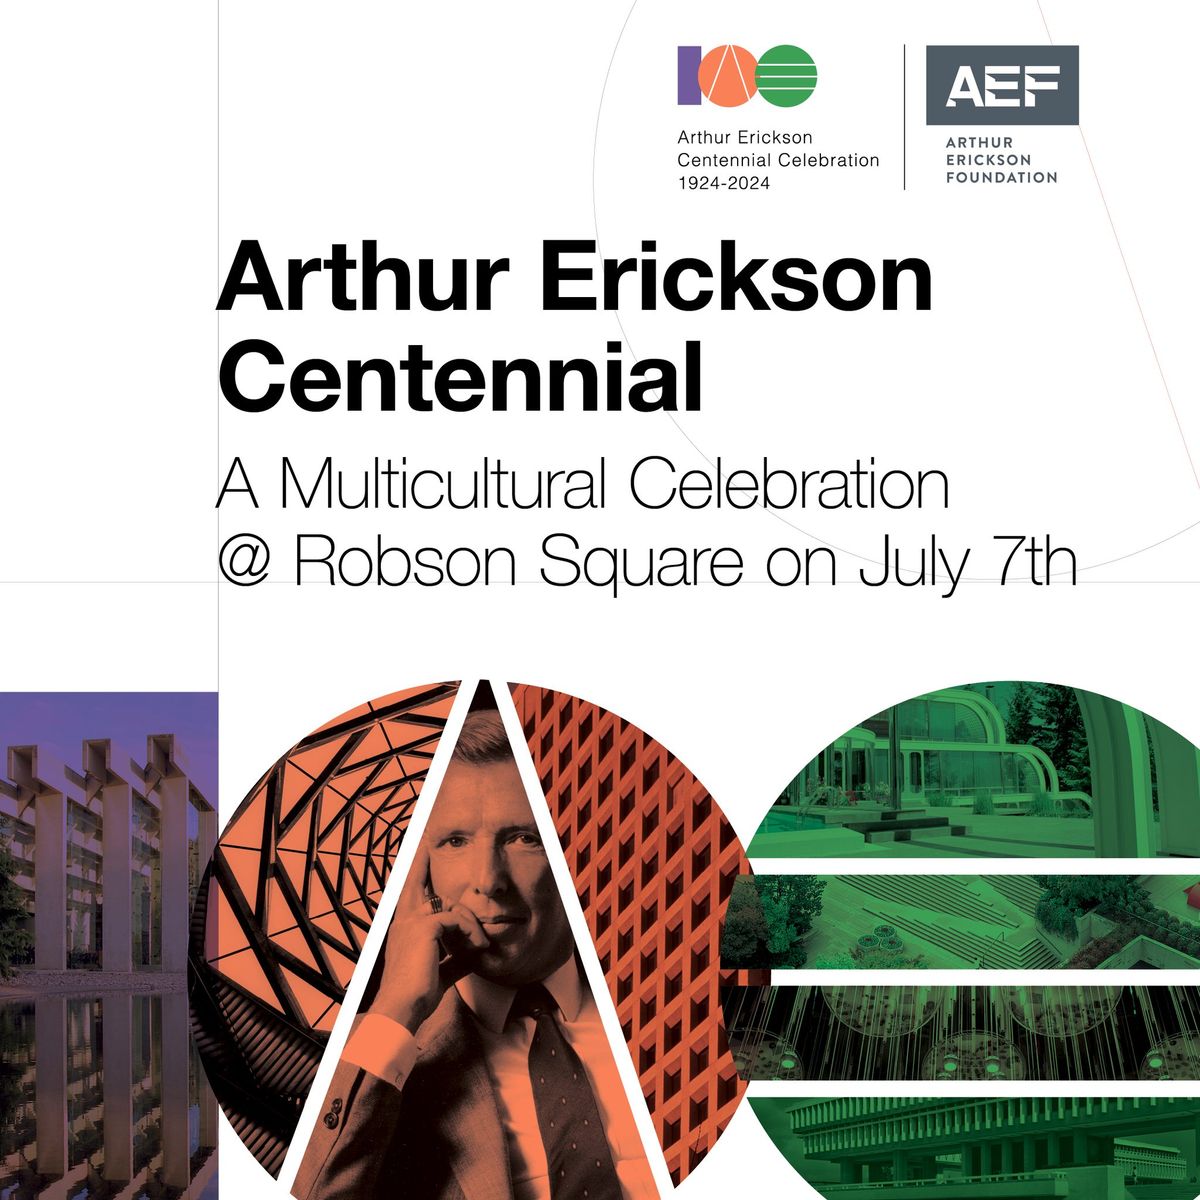 Free Arthur Erickson Centennial Celebration at Robson Square